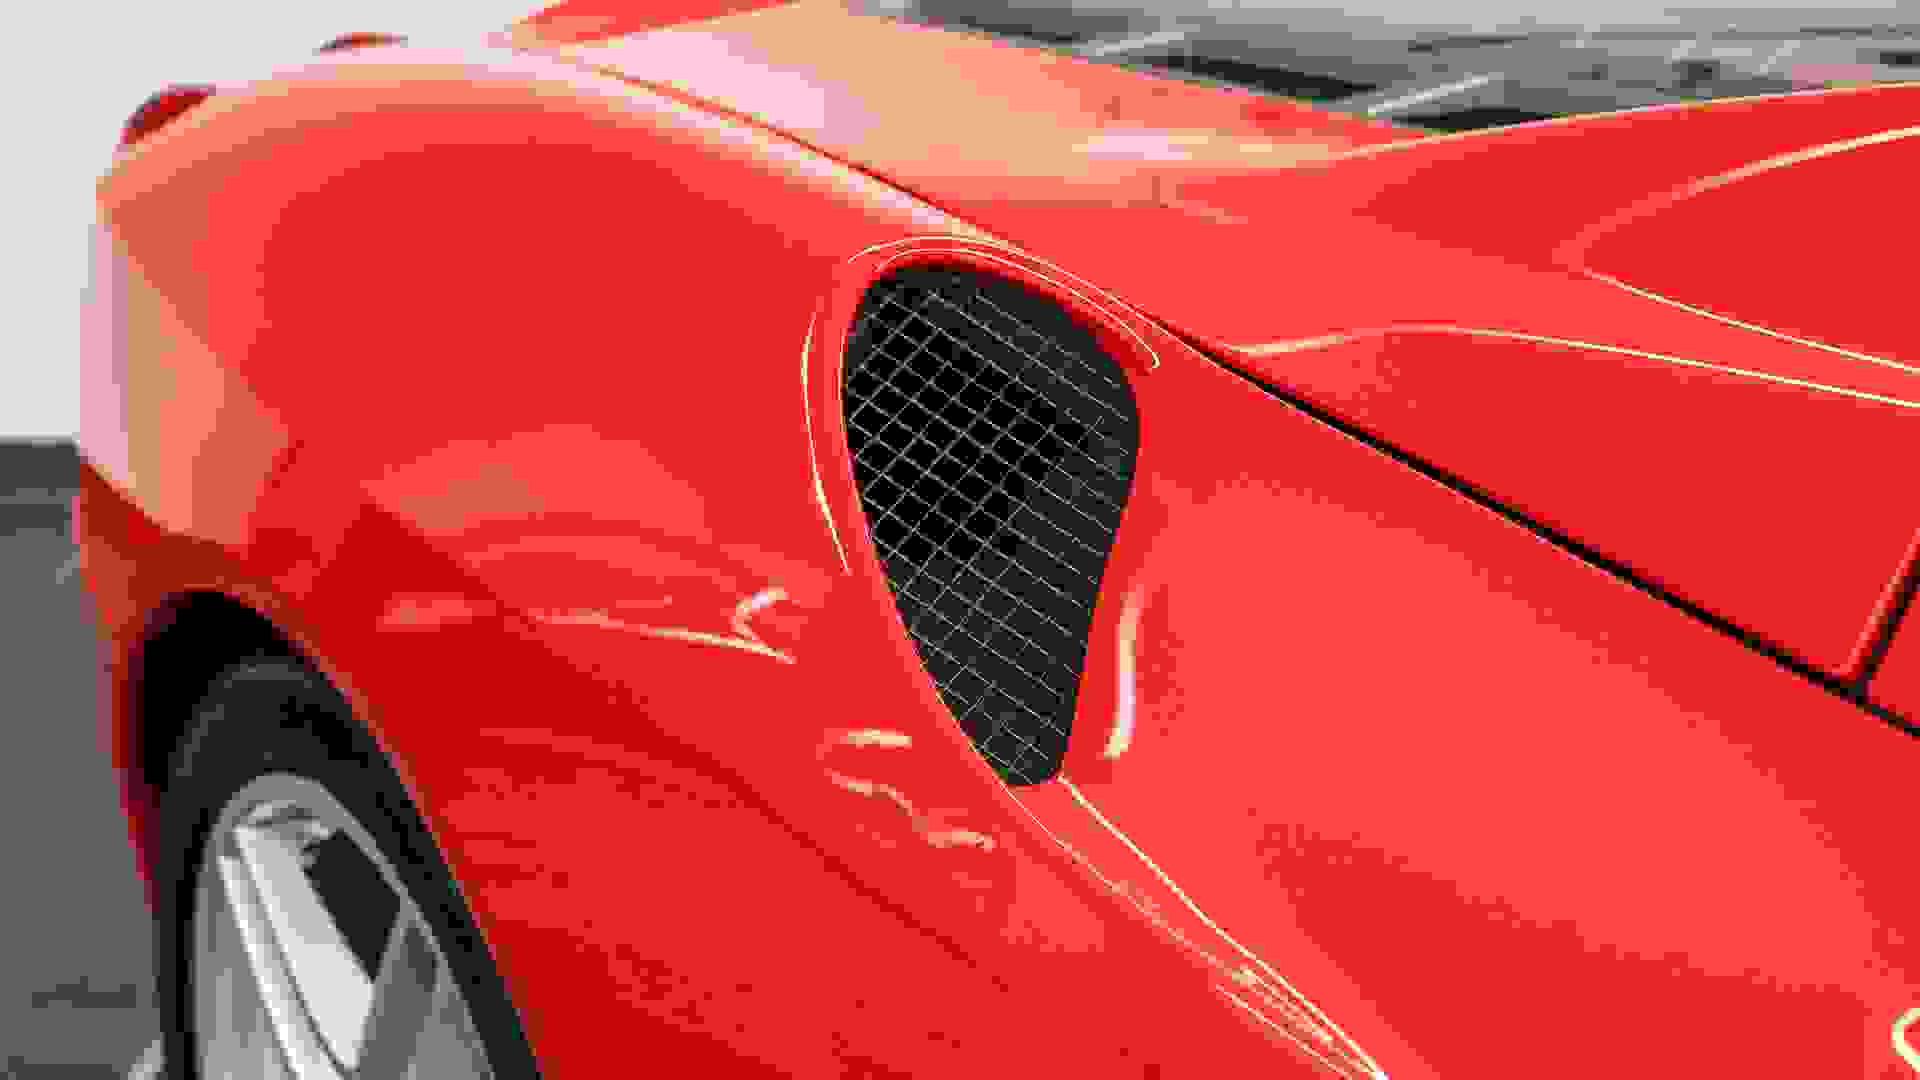 Ferrari F430 Photo 0701cd33-1abd-4ca4-b953-0a2787635e5c.jpg